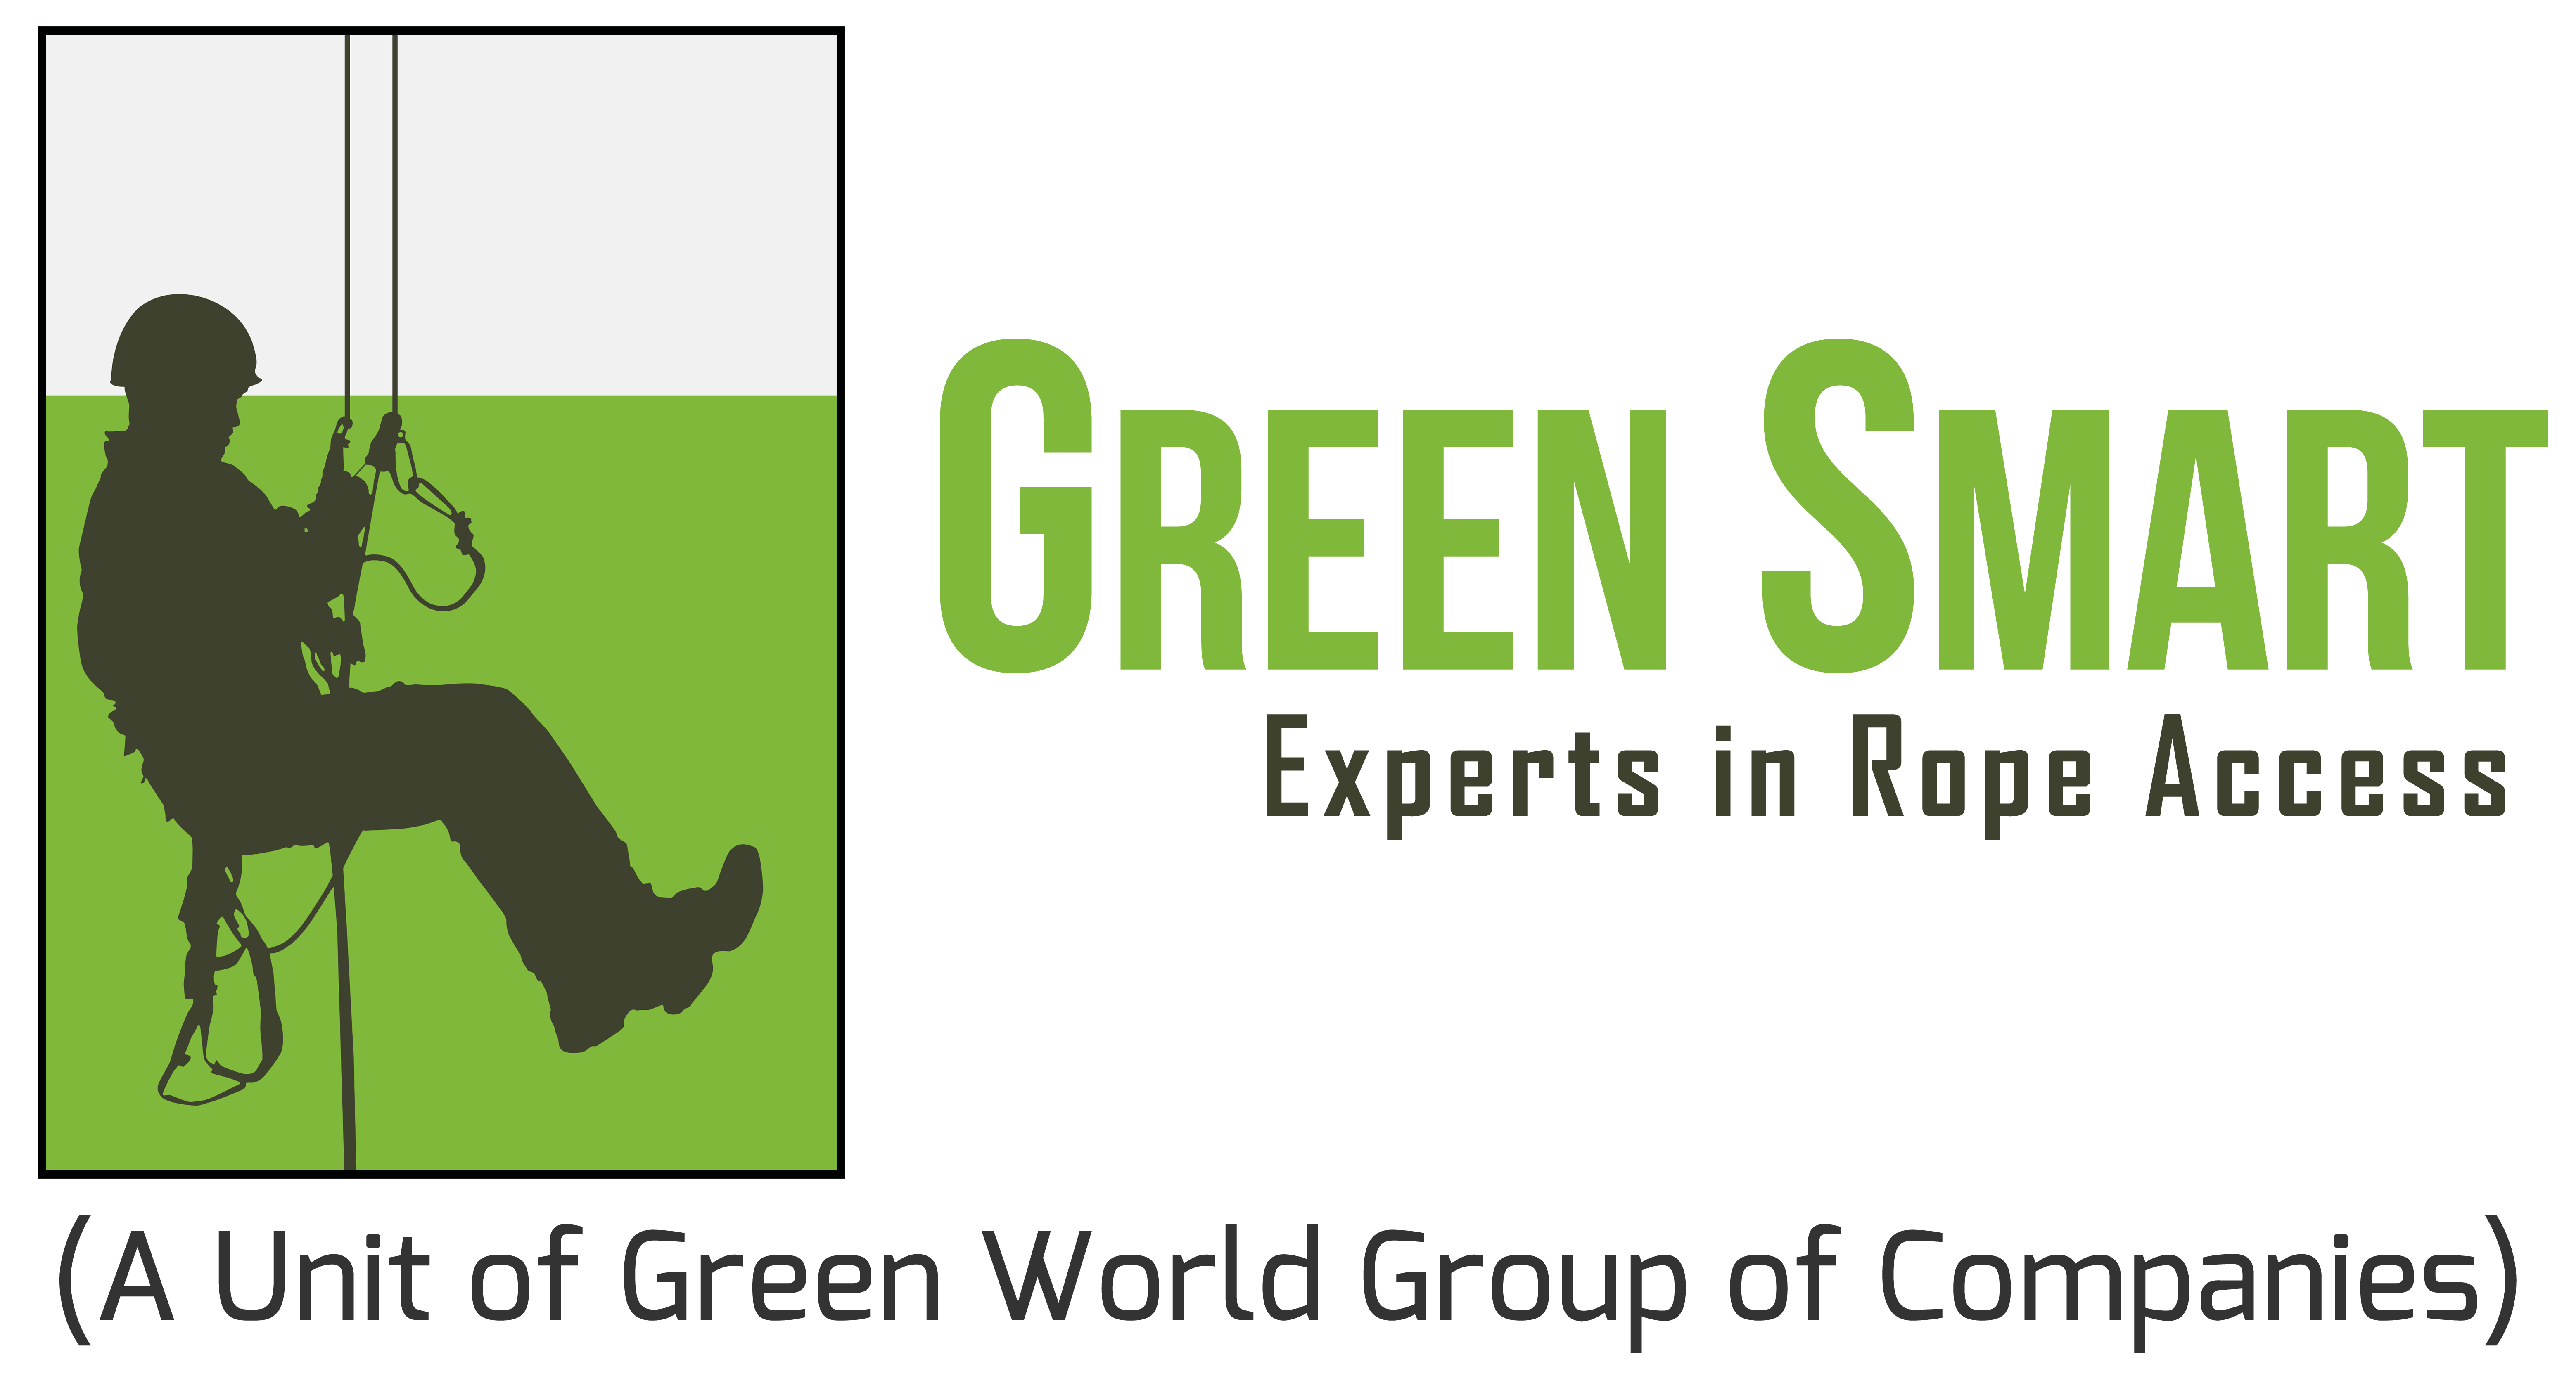 Green Smart Technical Services LLC